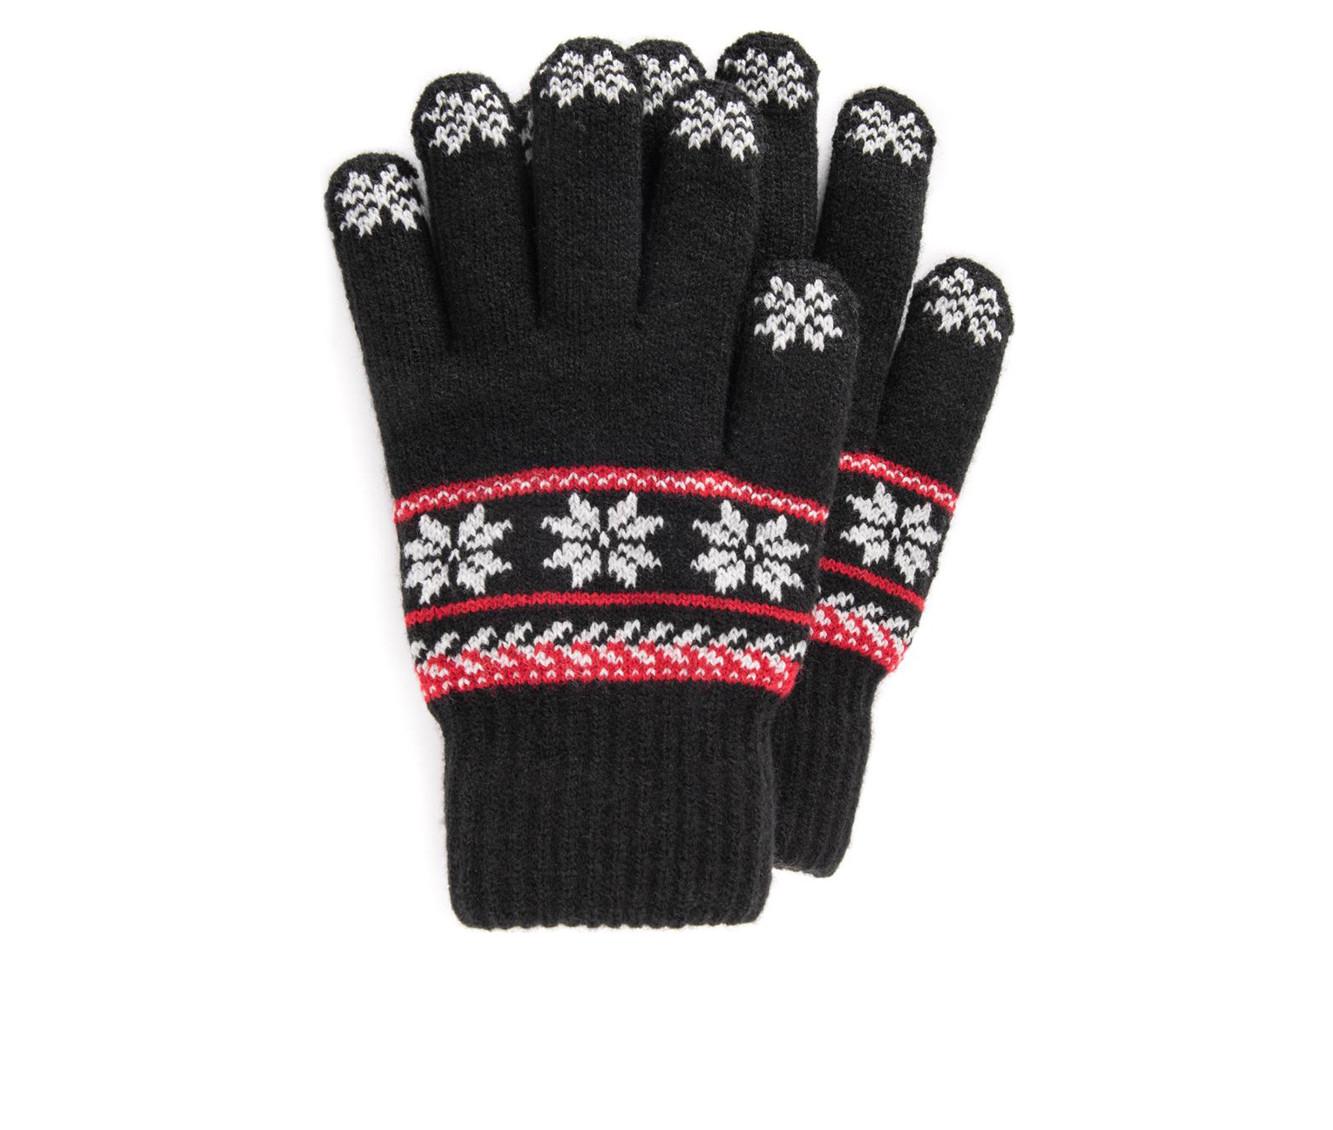 MUK LUKS Lined Knit Gloves